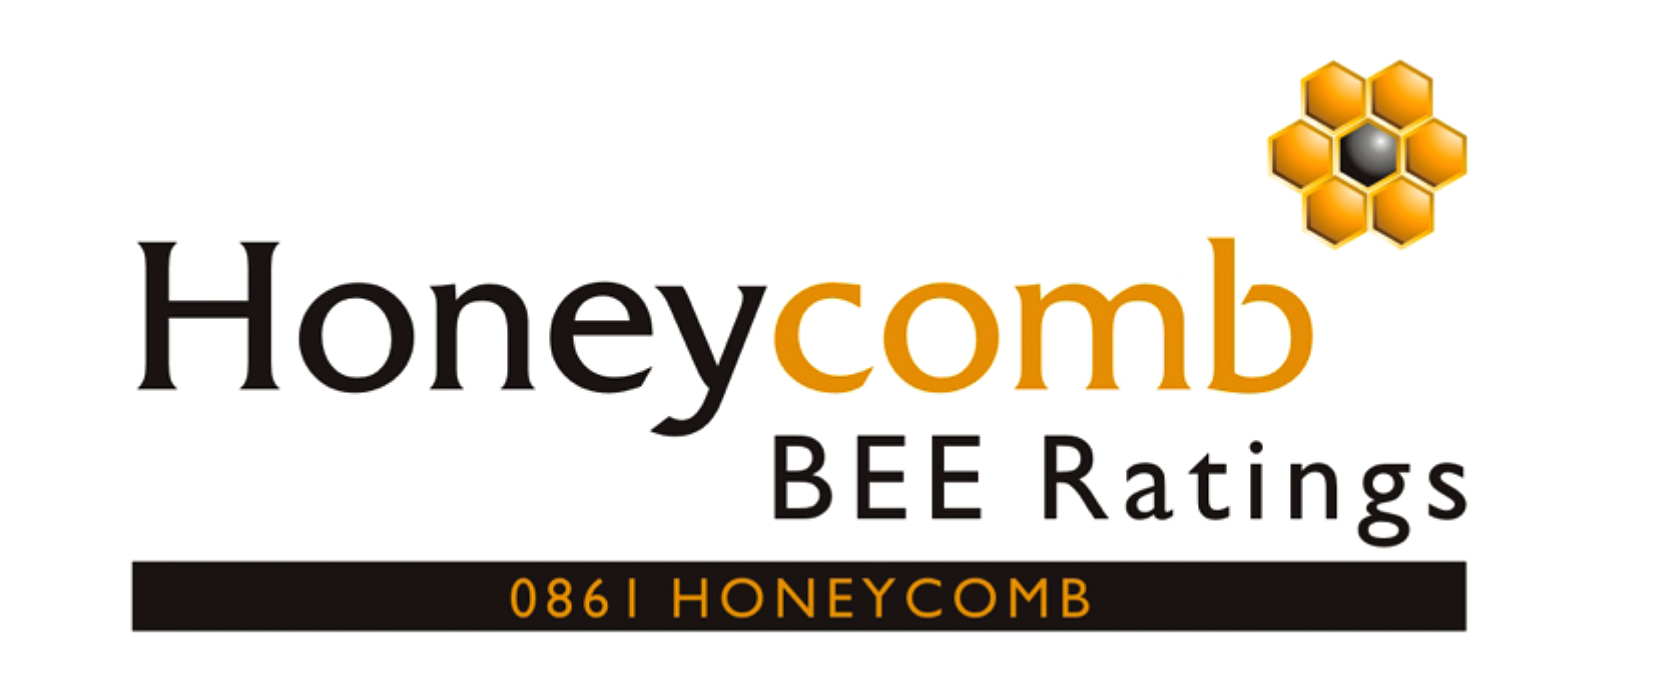 Honeycomb BEE Ratings